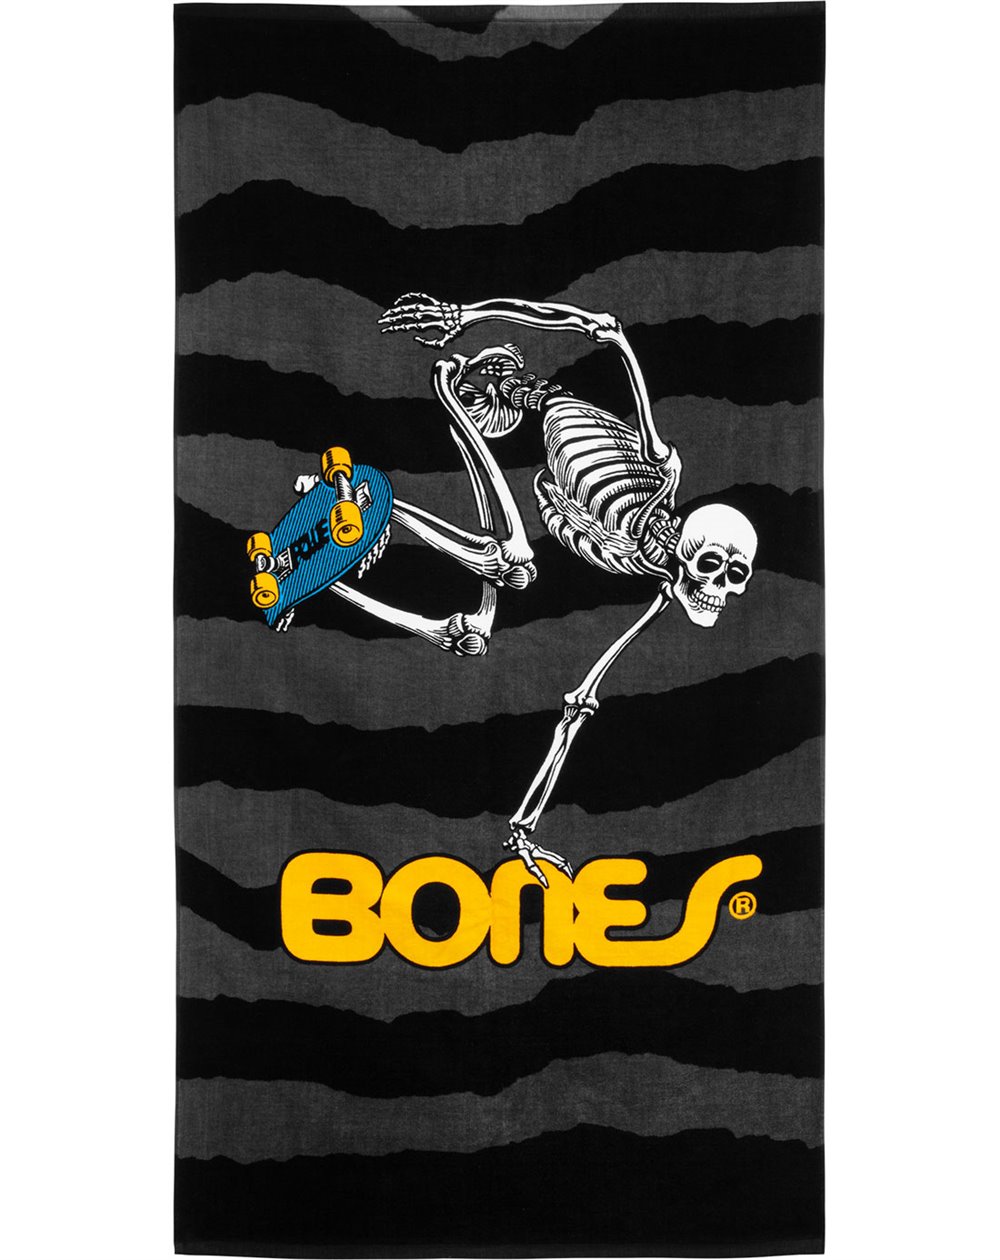 Powell Peralta Towel Sk8board Skeleton